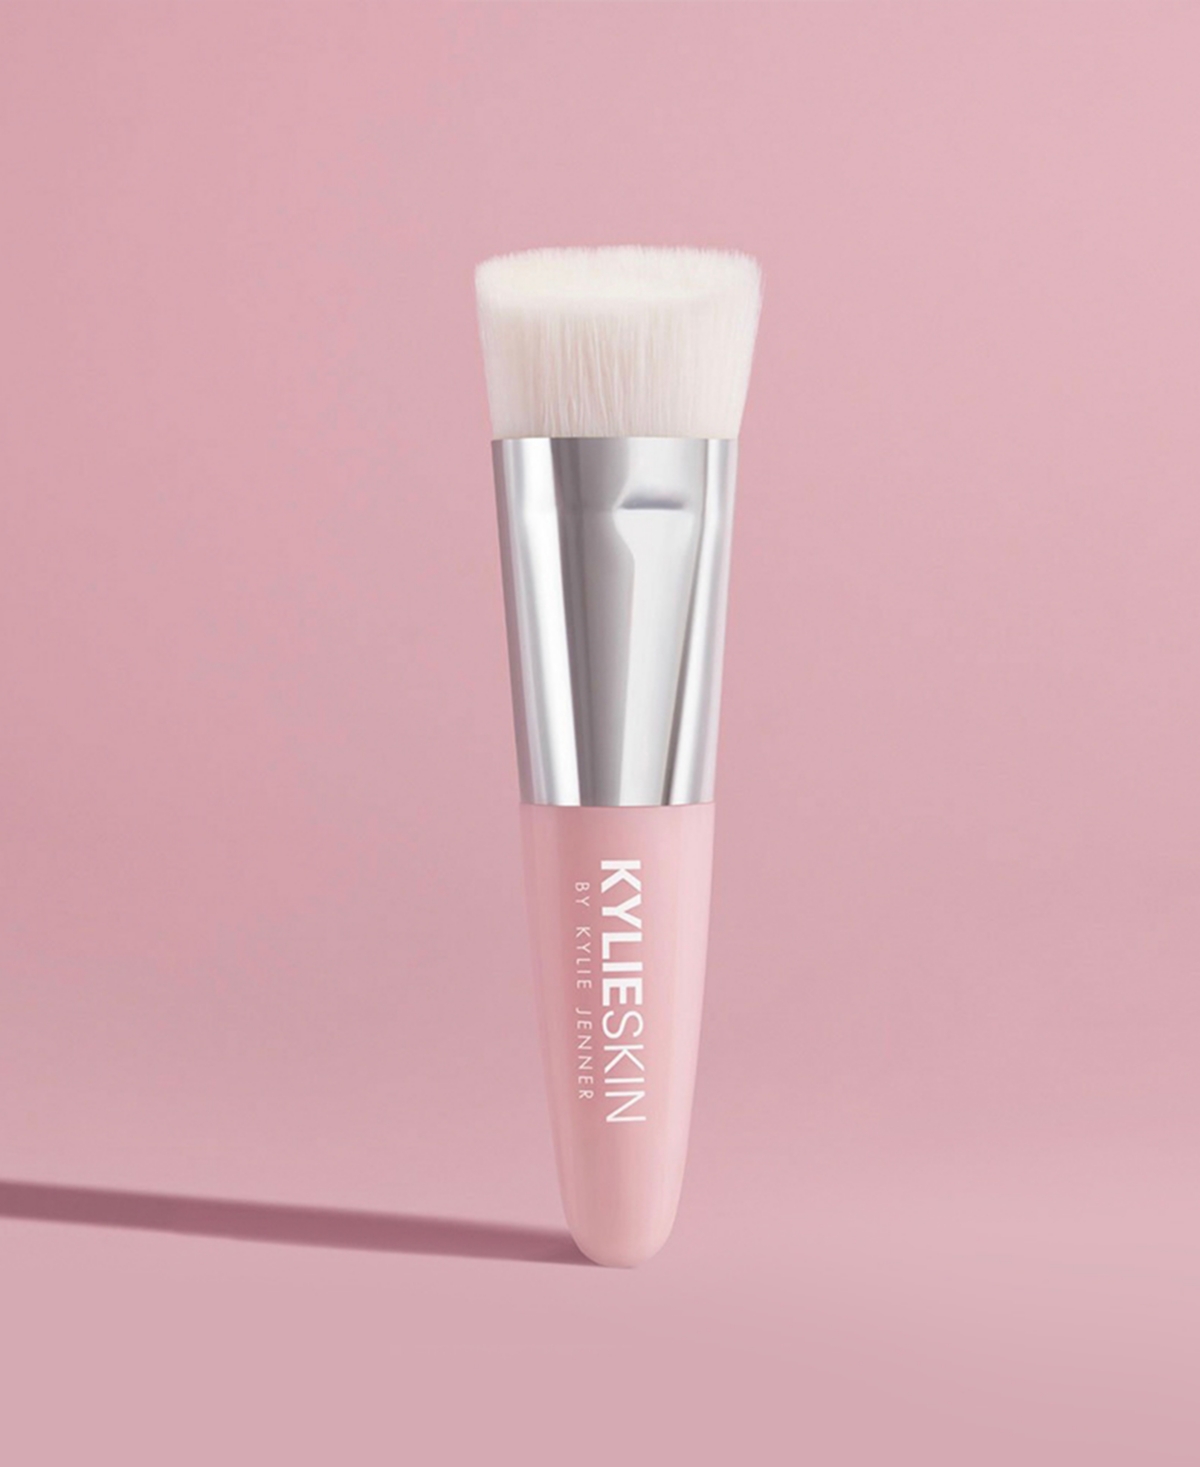 Kylie Cosmetics Face Mask Brush